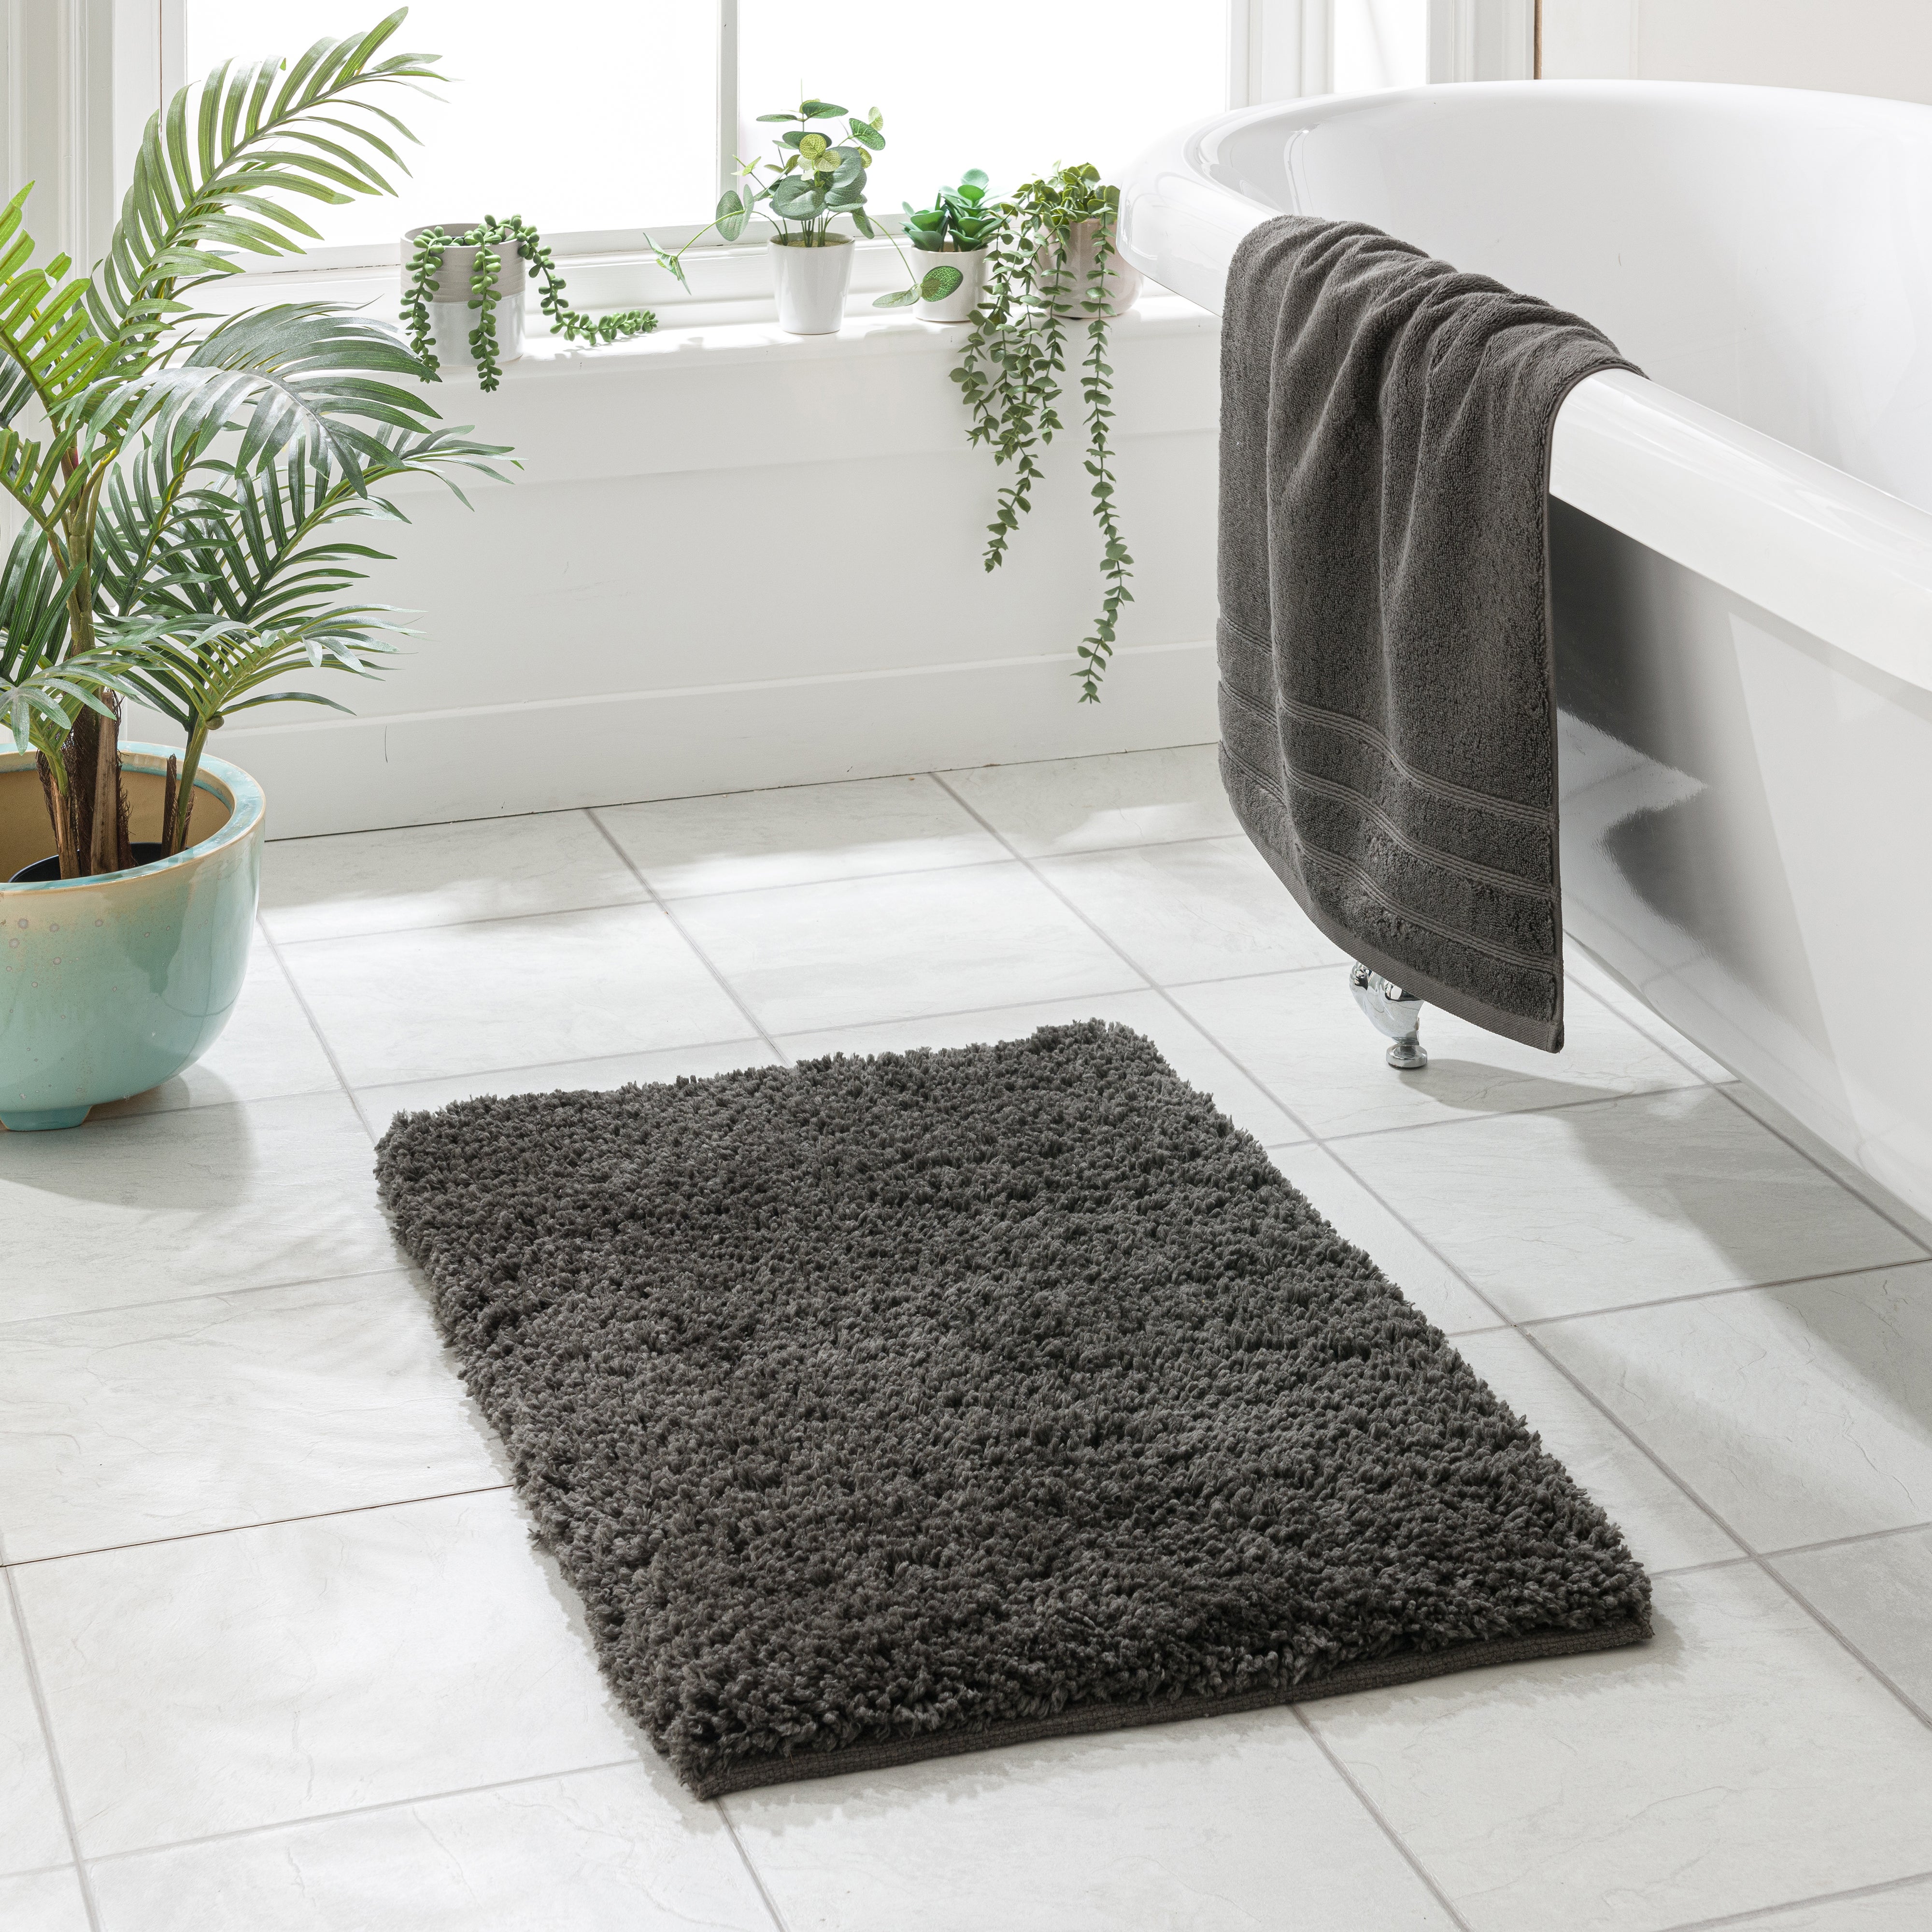 19 Beautiful Options For Choosing Bathroom Rug  Extra large bathroom rugs,  Large bathroom rugs, Large bath rugs